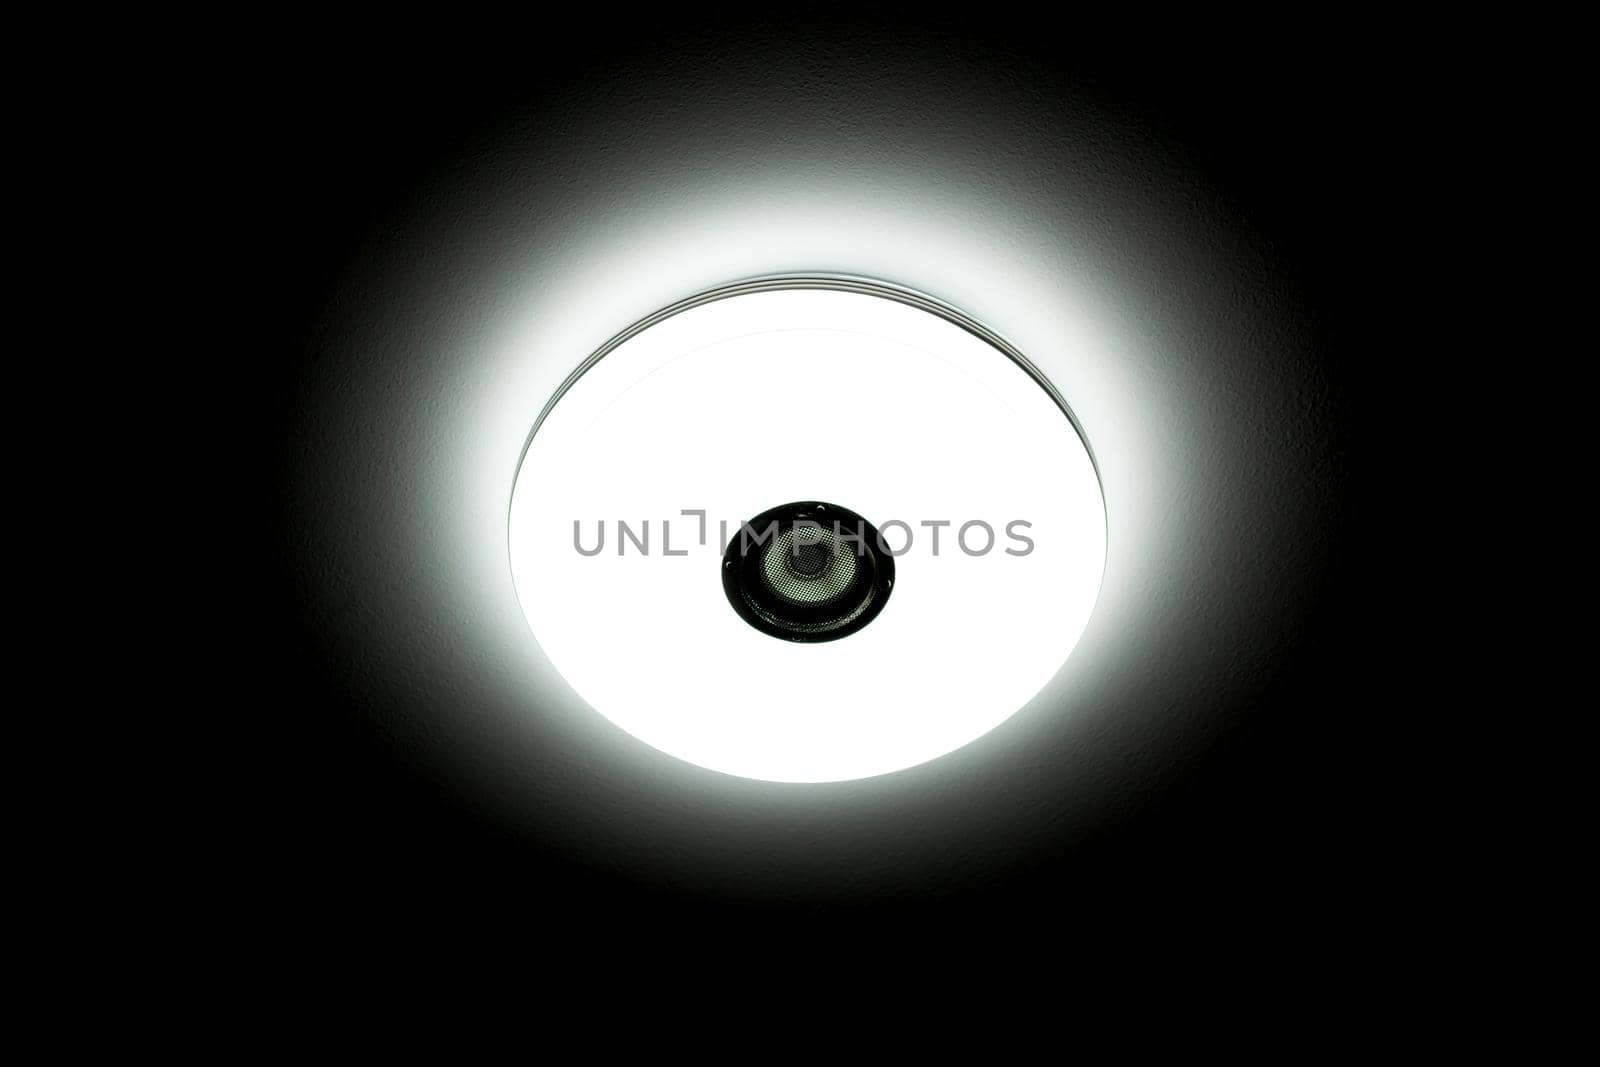 White light LED ceiling light with built-in wireless speakers over black background.